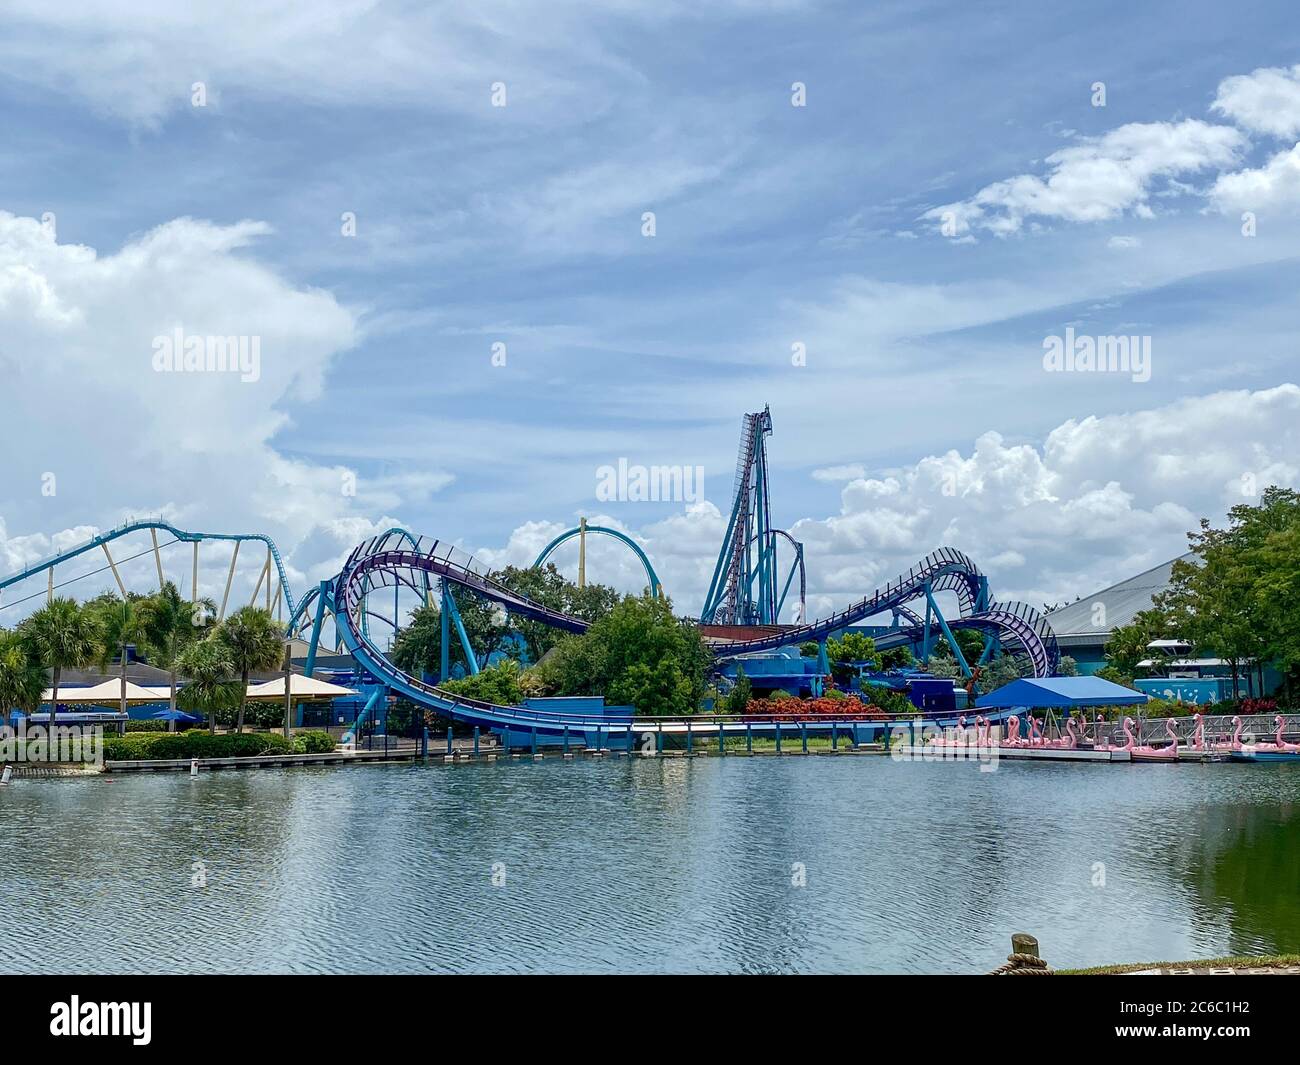 Orlando, FL/USA-7/3/20: A landscape view of the rollercoasters at Seaworld in Orlando, Florida. Stock Photo